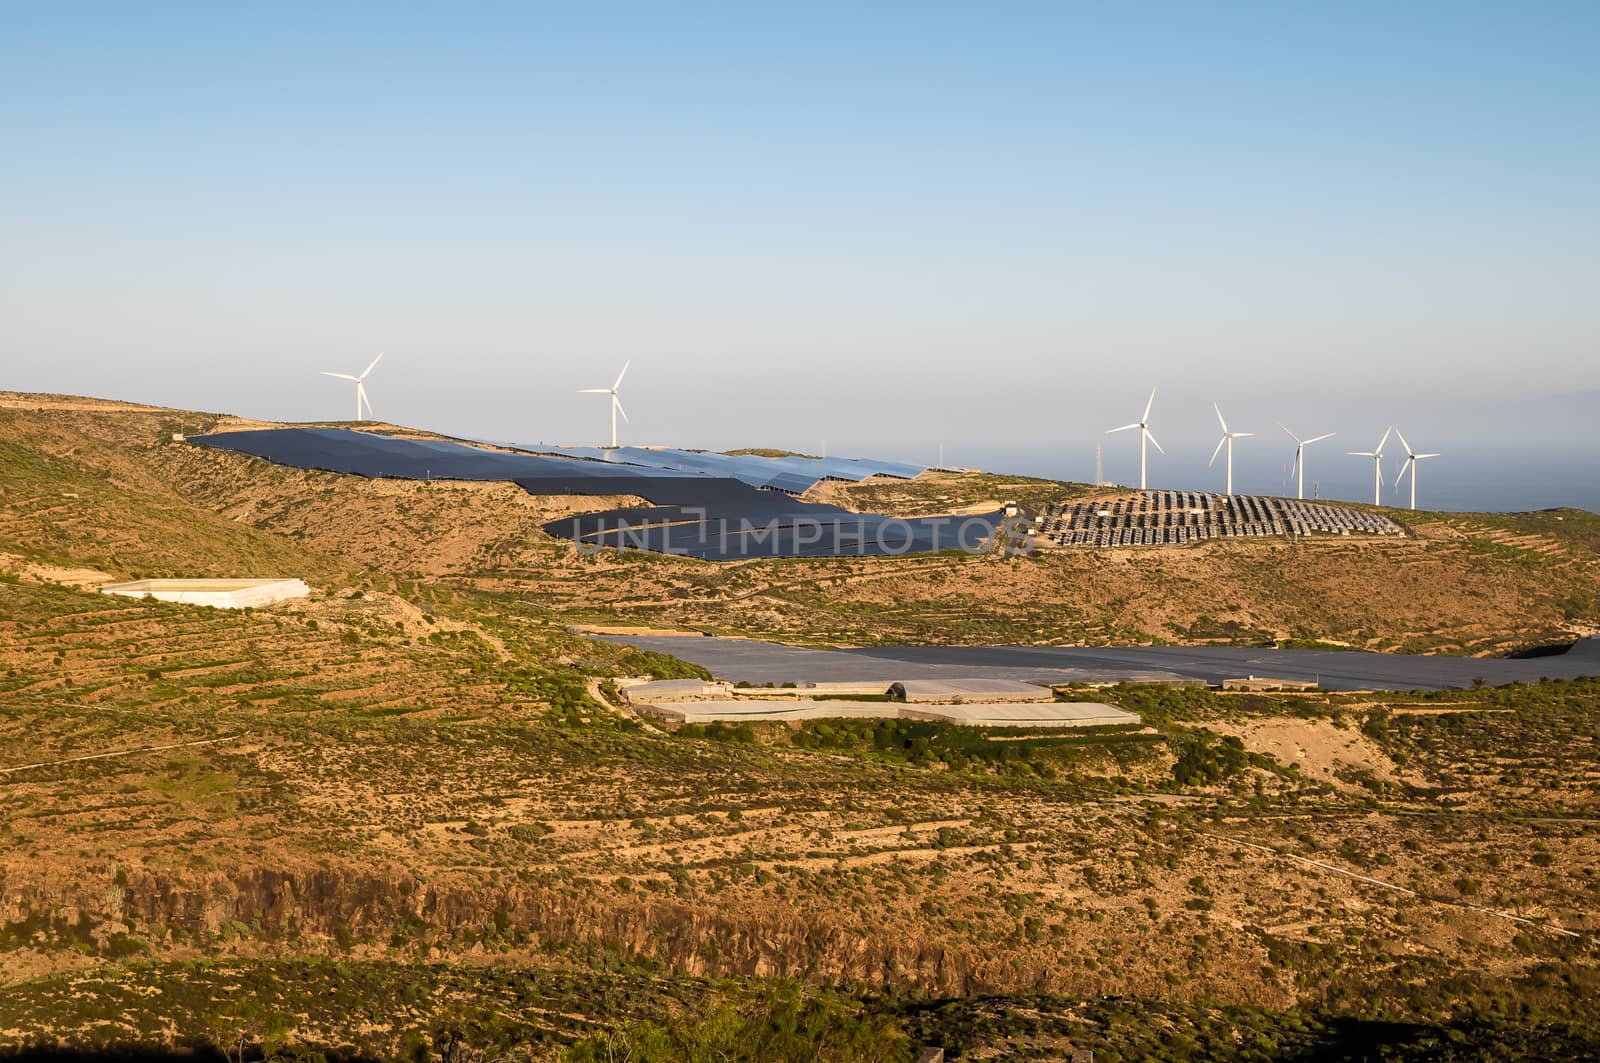 Power Plant Renewable Energy Wind Turbines and Solar Panels